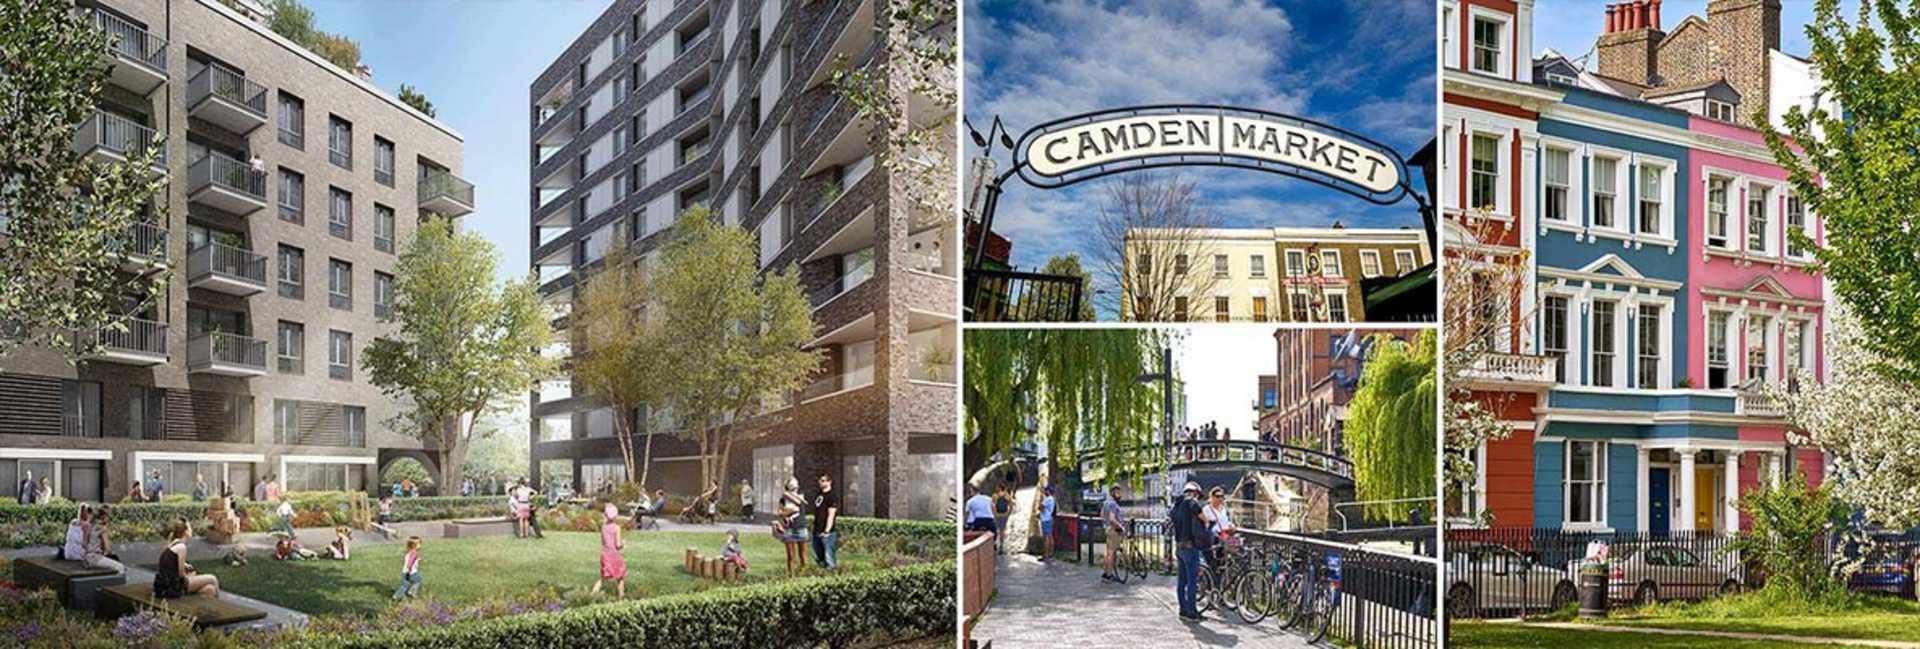 5 upcoming developments from Berkeley Group - Camden